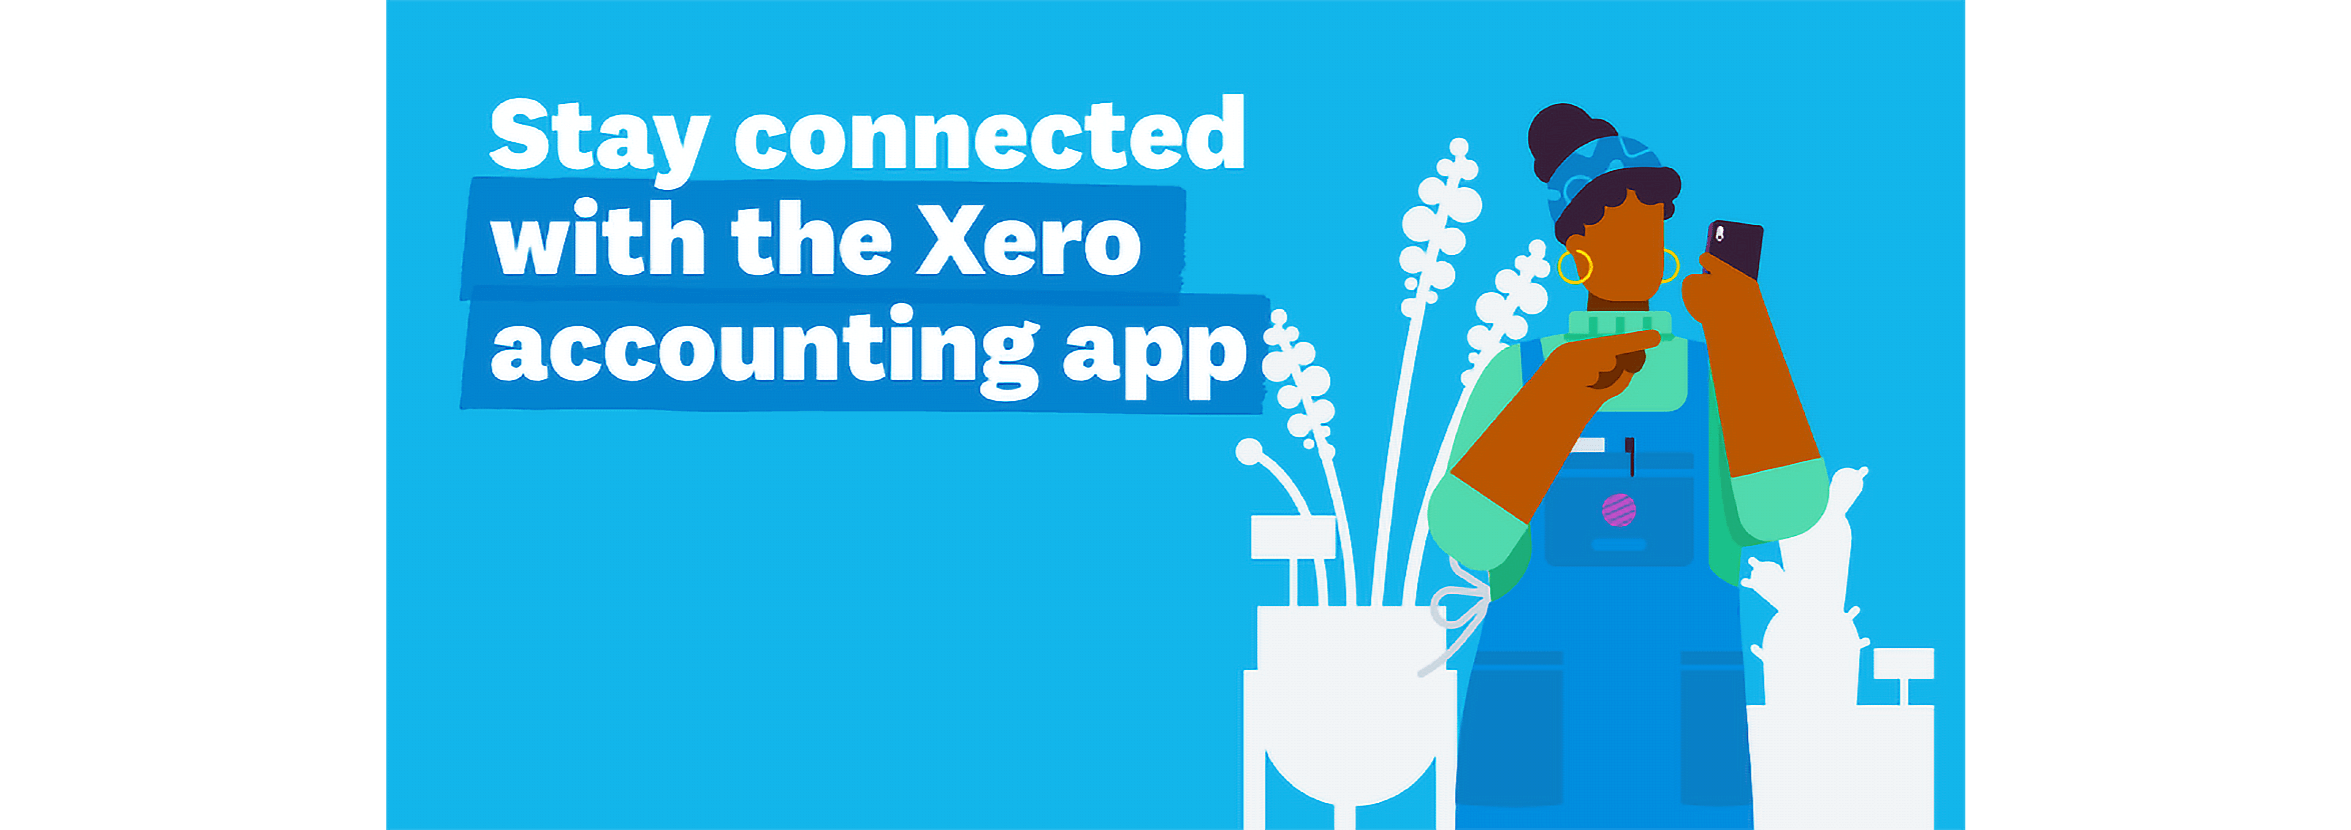 A Xero customer accesses their accounts on their phone using the Xero accounting app.